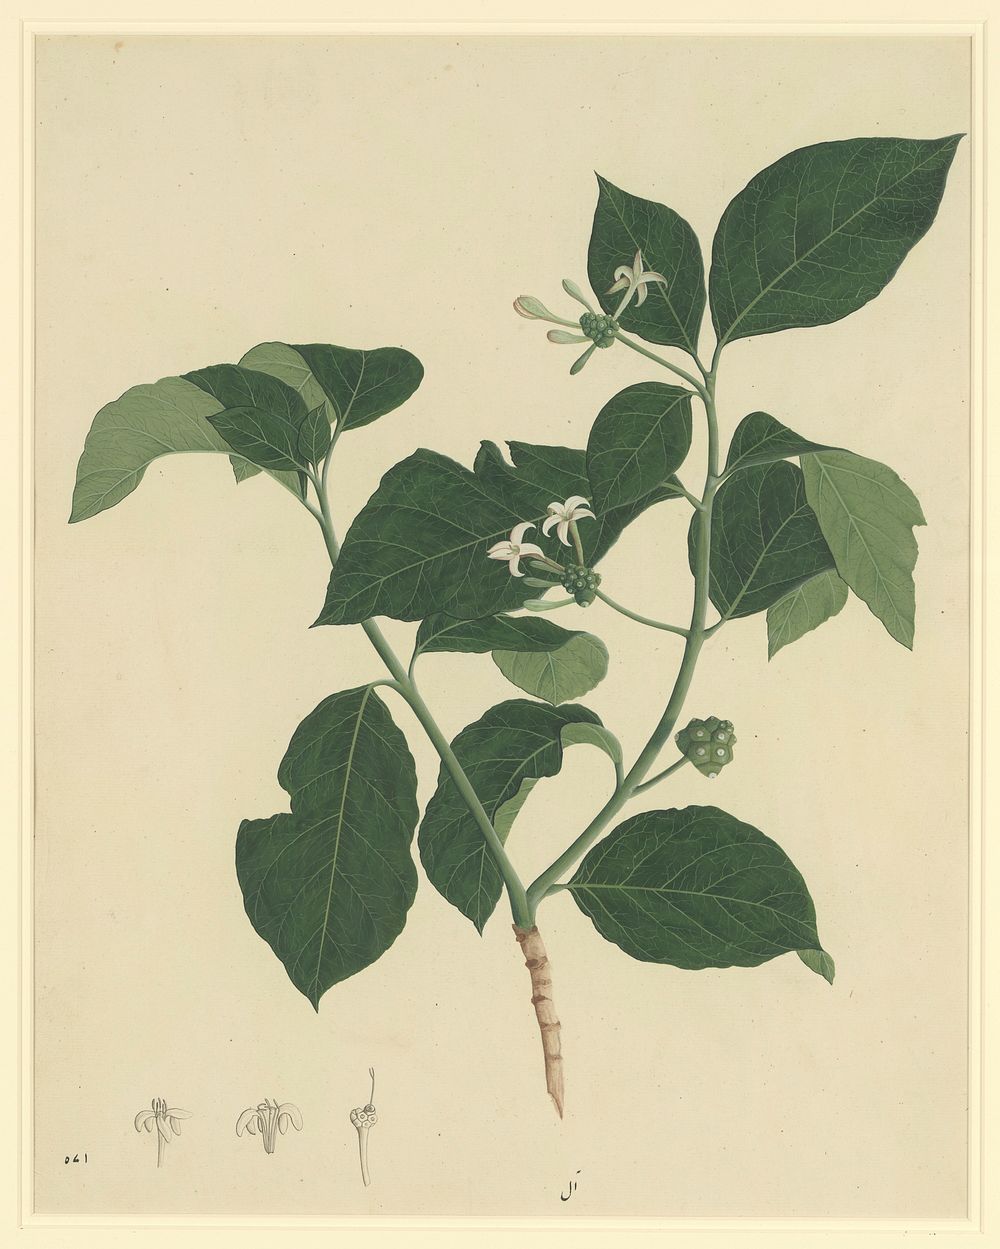 Botanical Study of Indian Mulberry (Morinda citrifolia), late 18th century